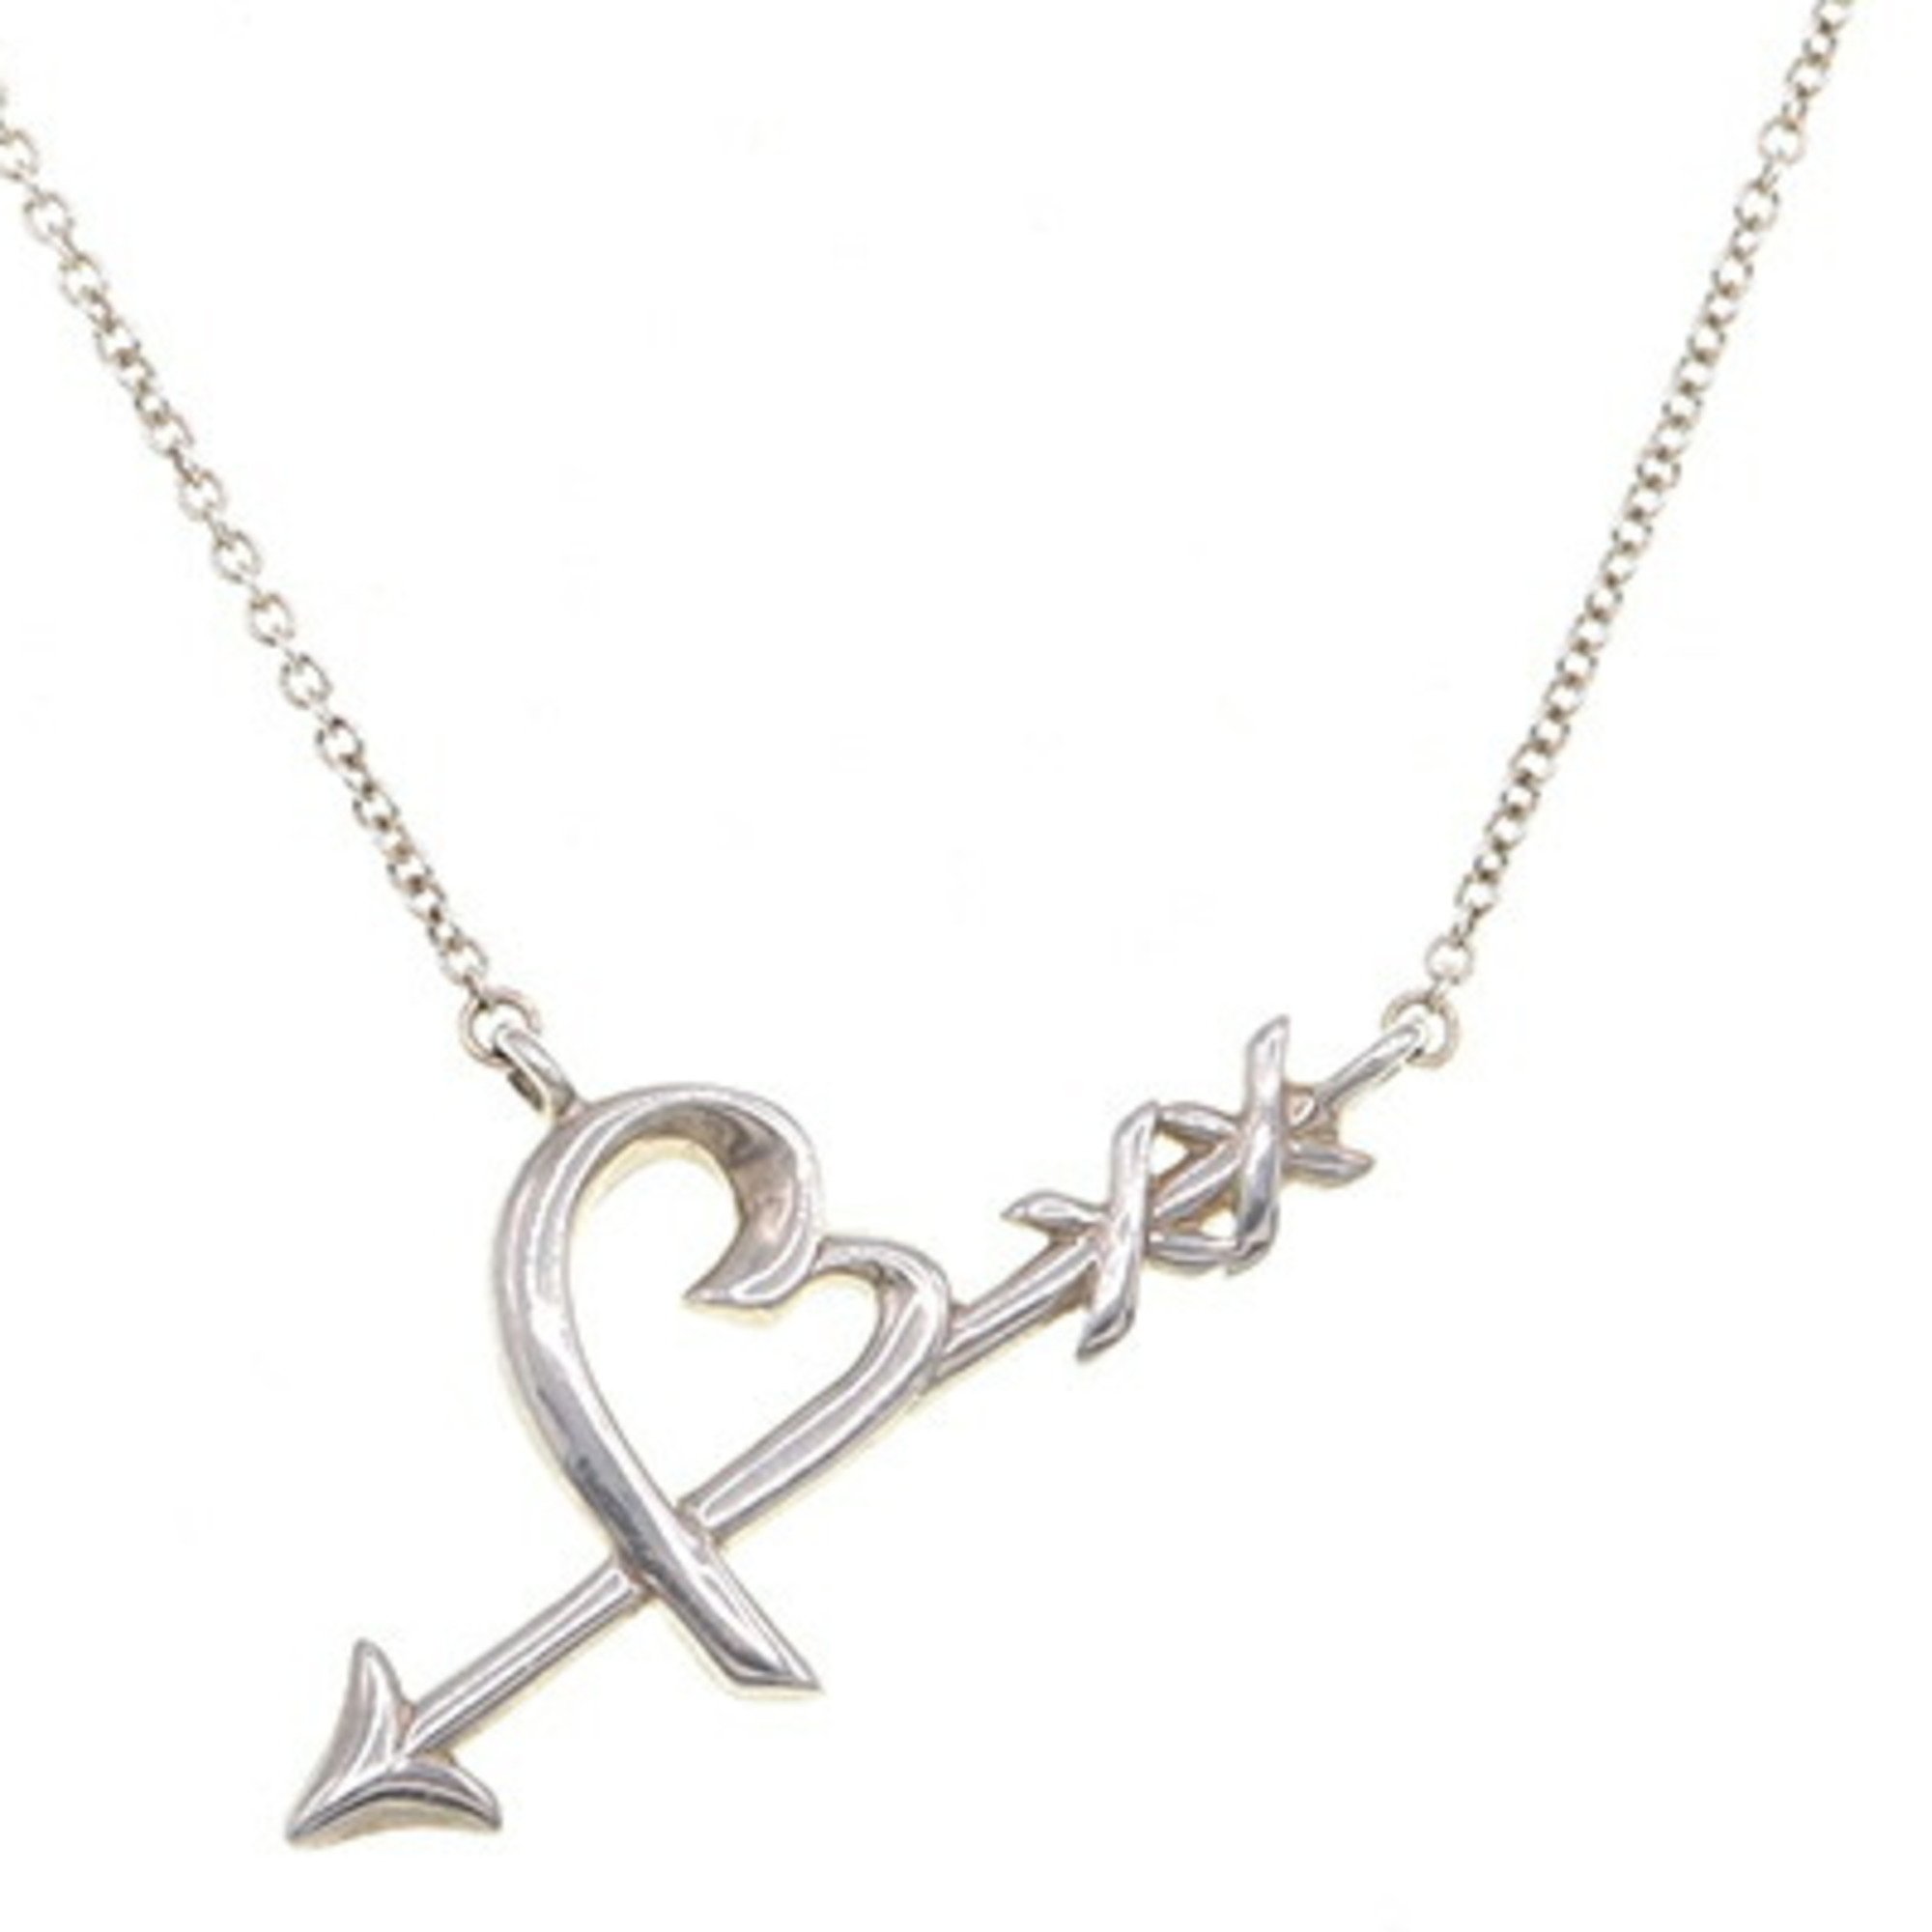 Tiffany Necklace Paloma Picasso Loving Heart Arrow SV Sterling Silver 925 Pendant Women's TIFFANY & CO